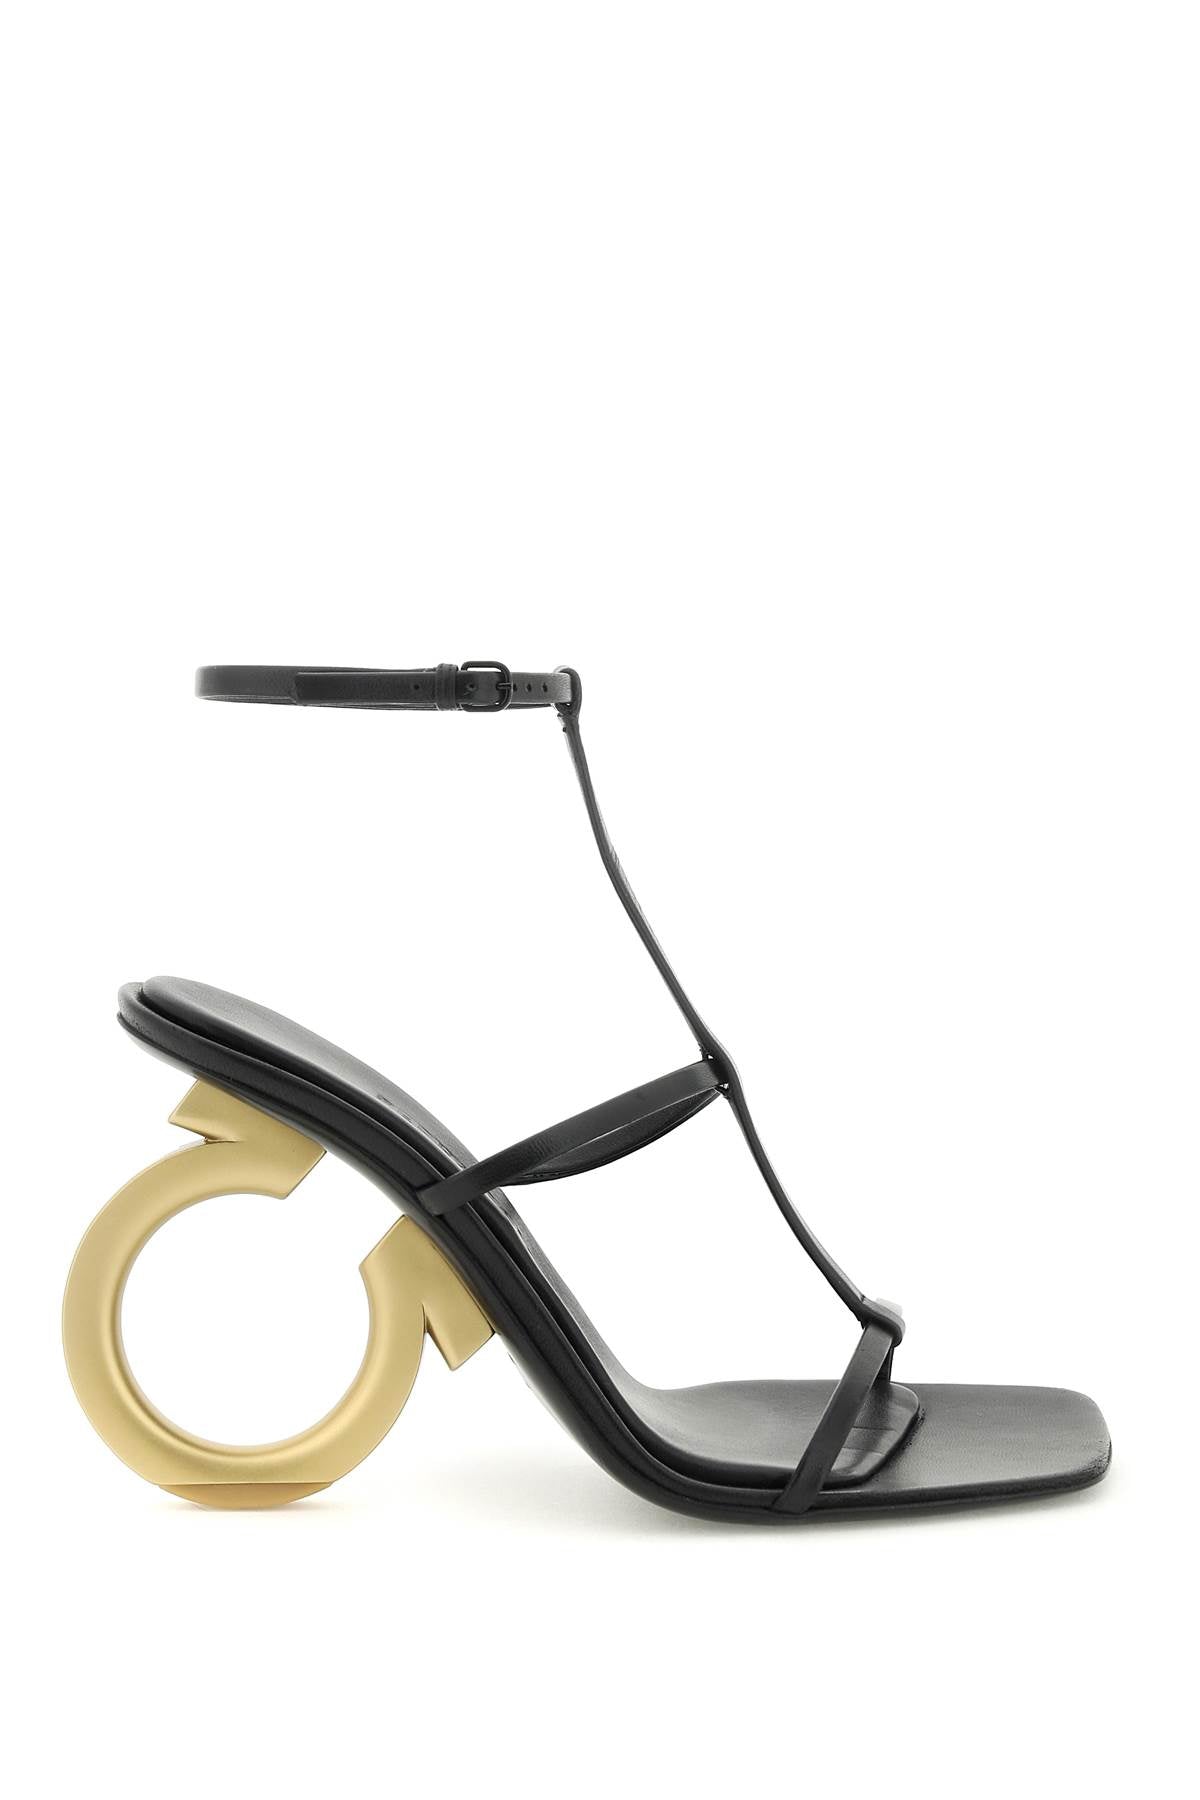 FERRAGAMO Sculptural Gold Heel Suede Sandals - Adjustable Ankle Strap, Mixed Colors